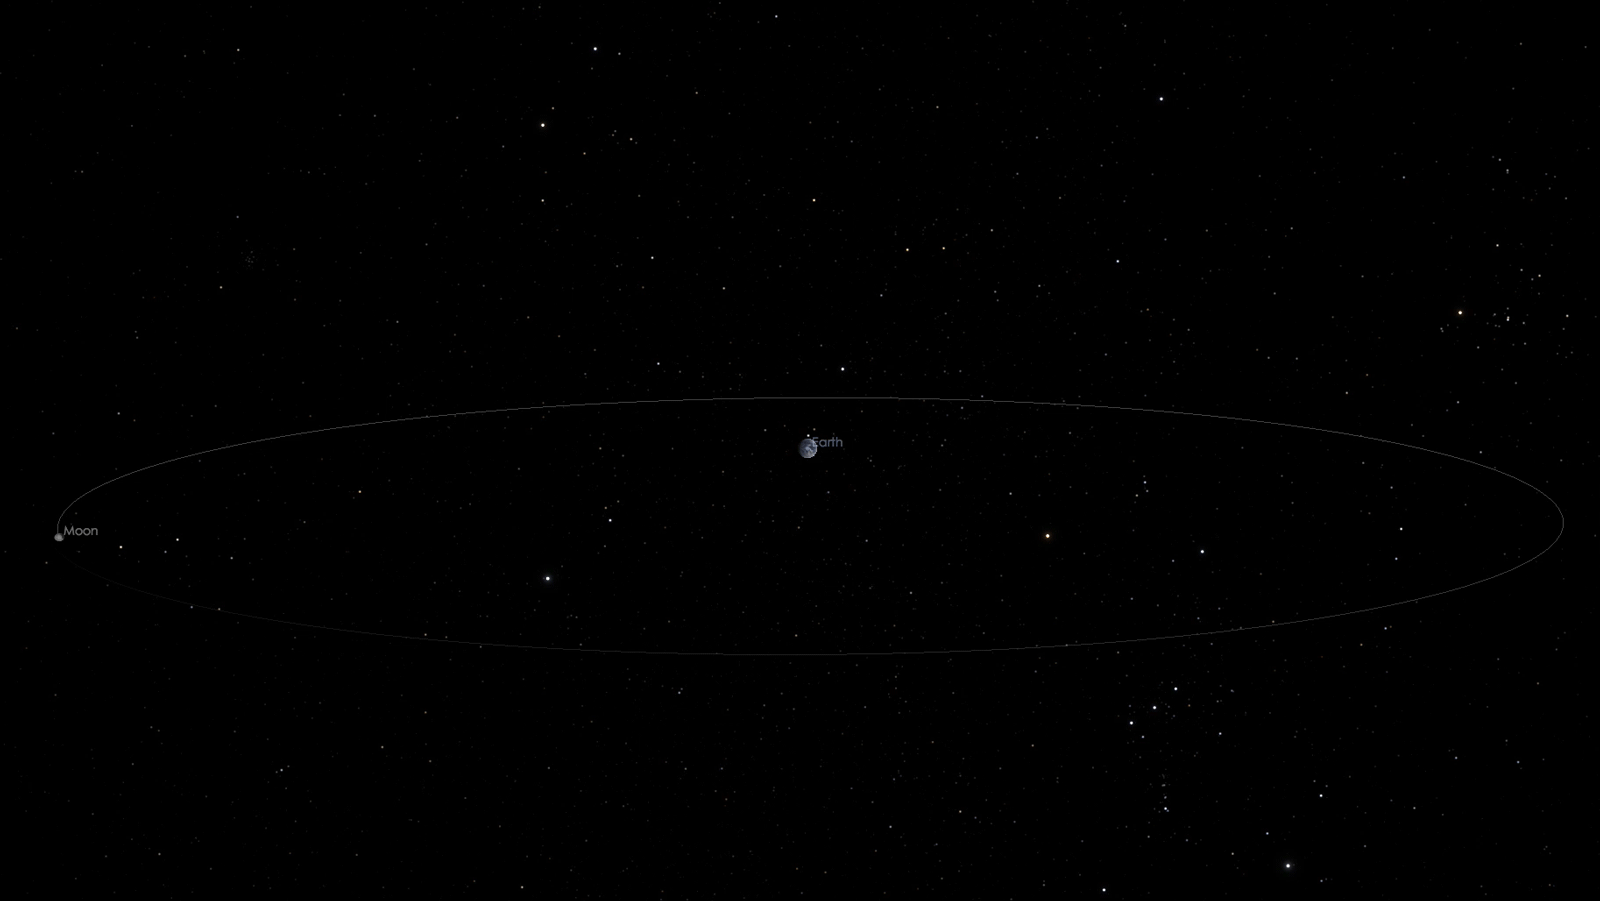 Asteroid 2018 CB flog am Freitag, den 9. Februar relativ knapp an der Erde vorbei.